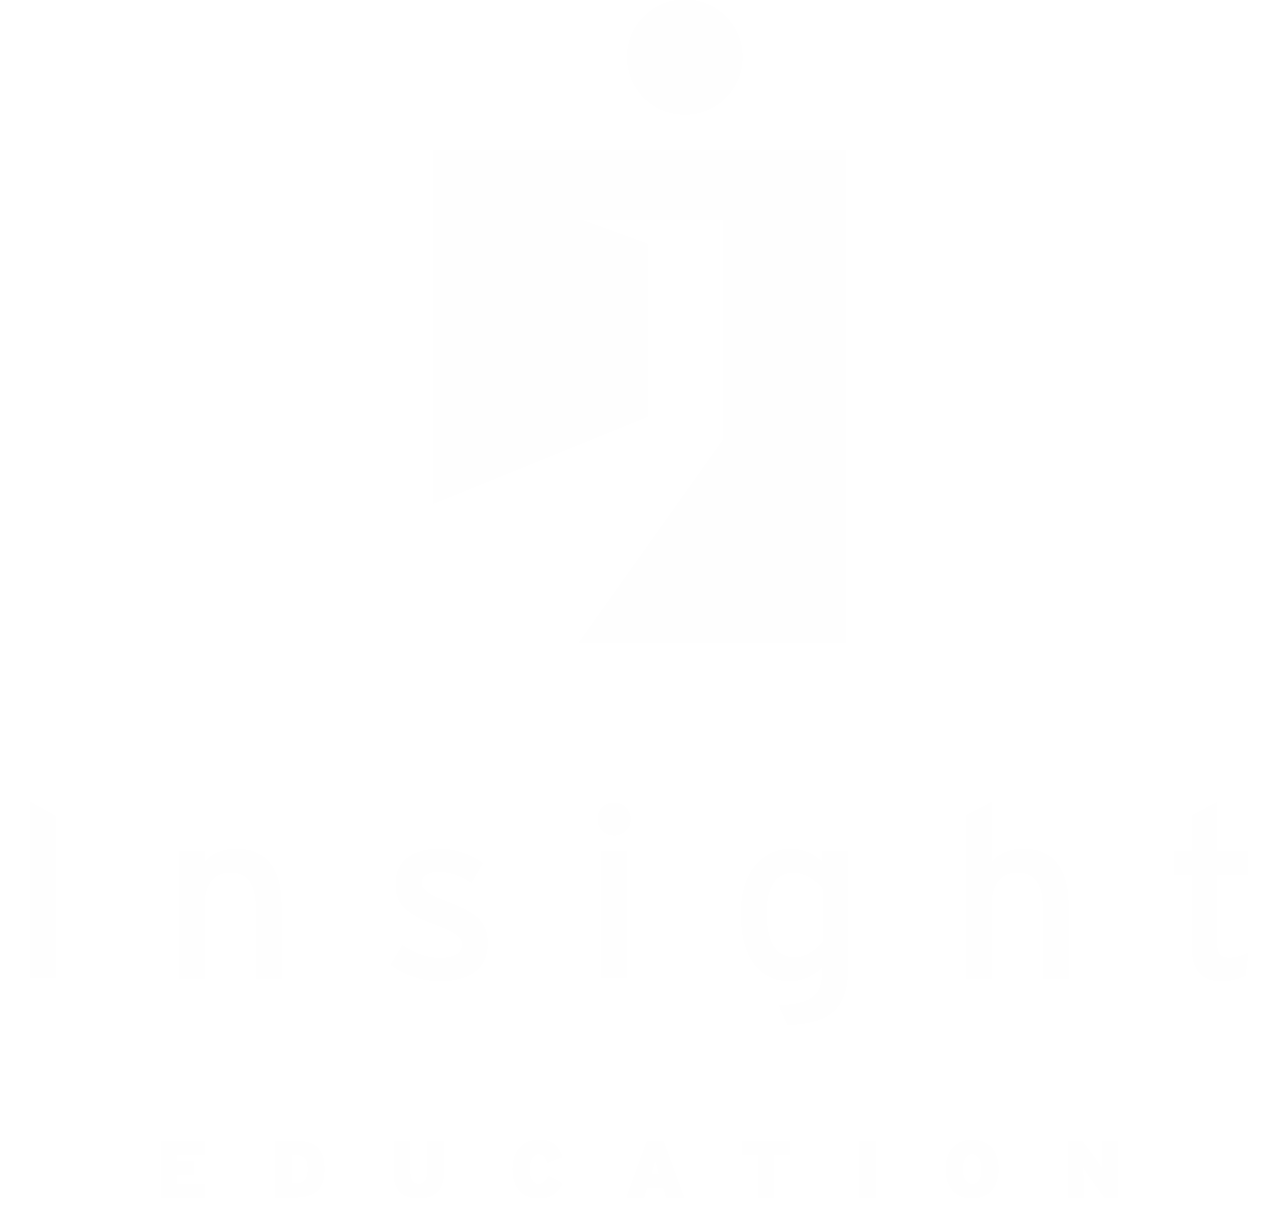 Insight Education